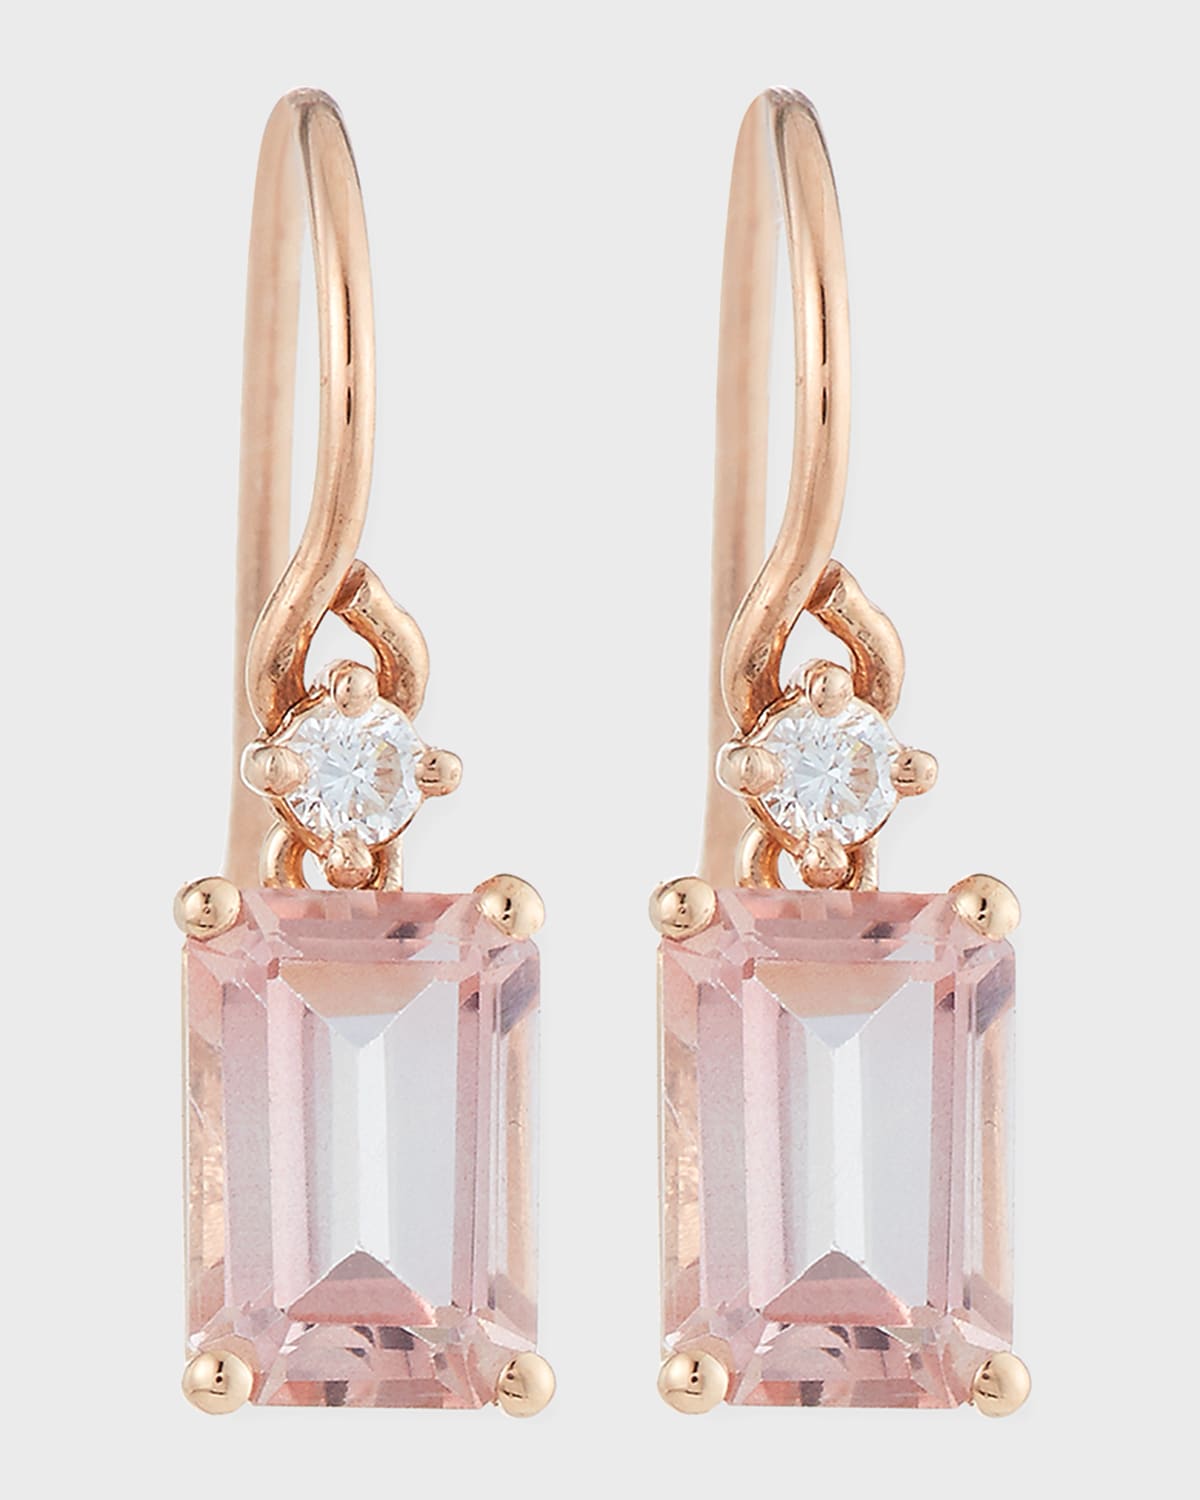 Bloom 14k Rose Gold Emerald-Cut Dangle Earrings